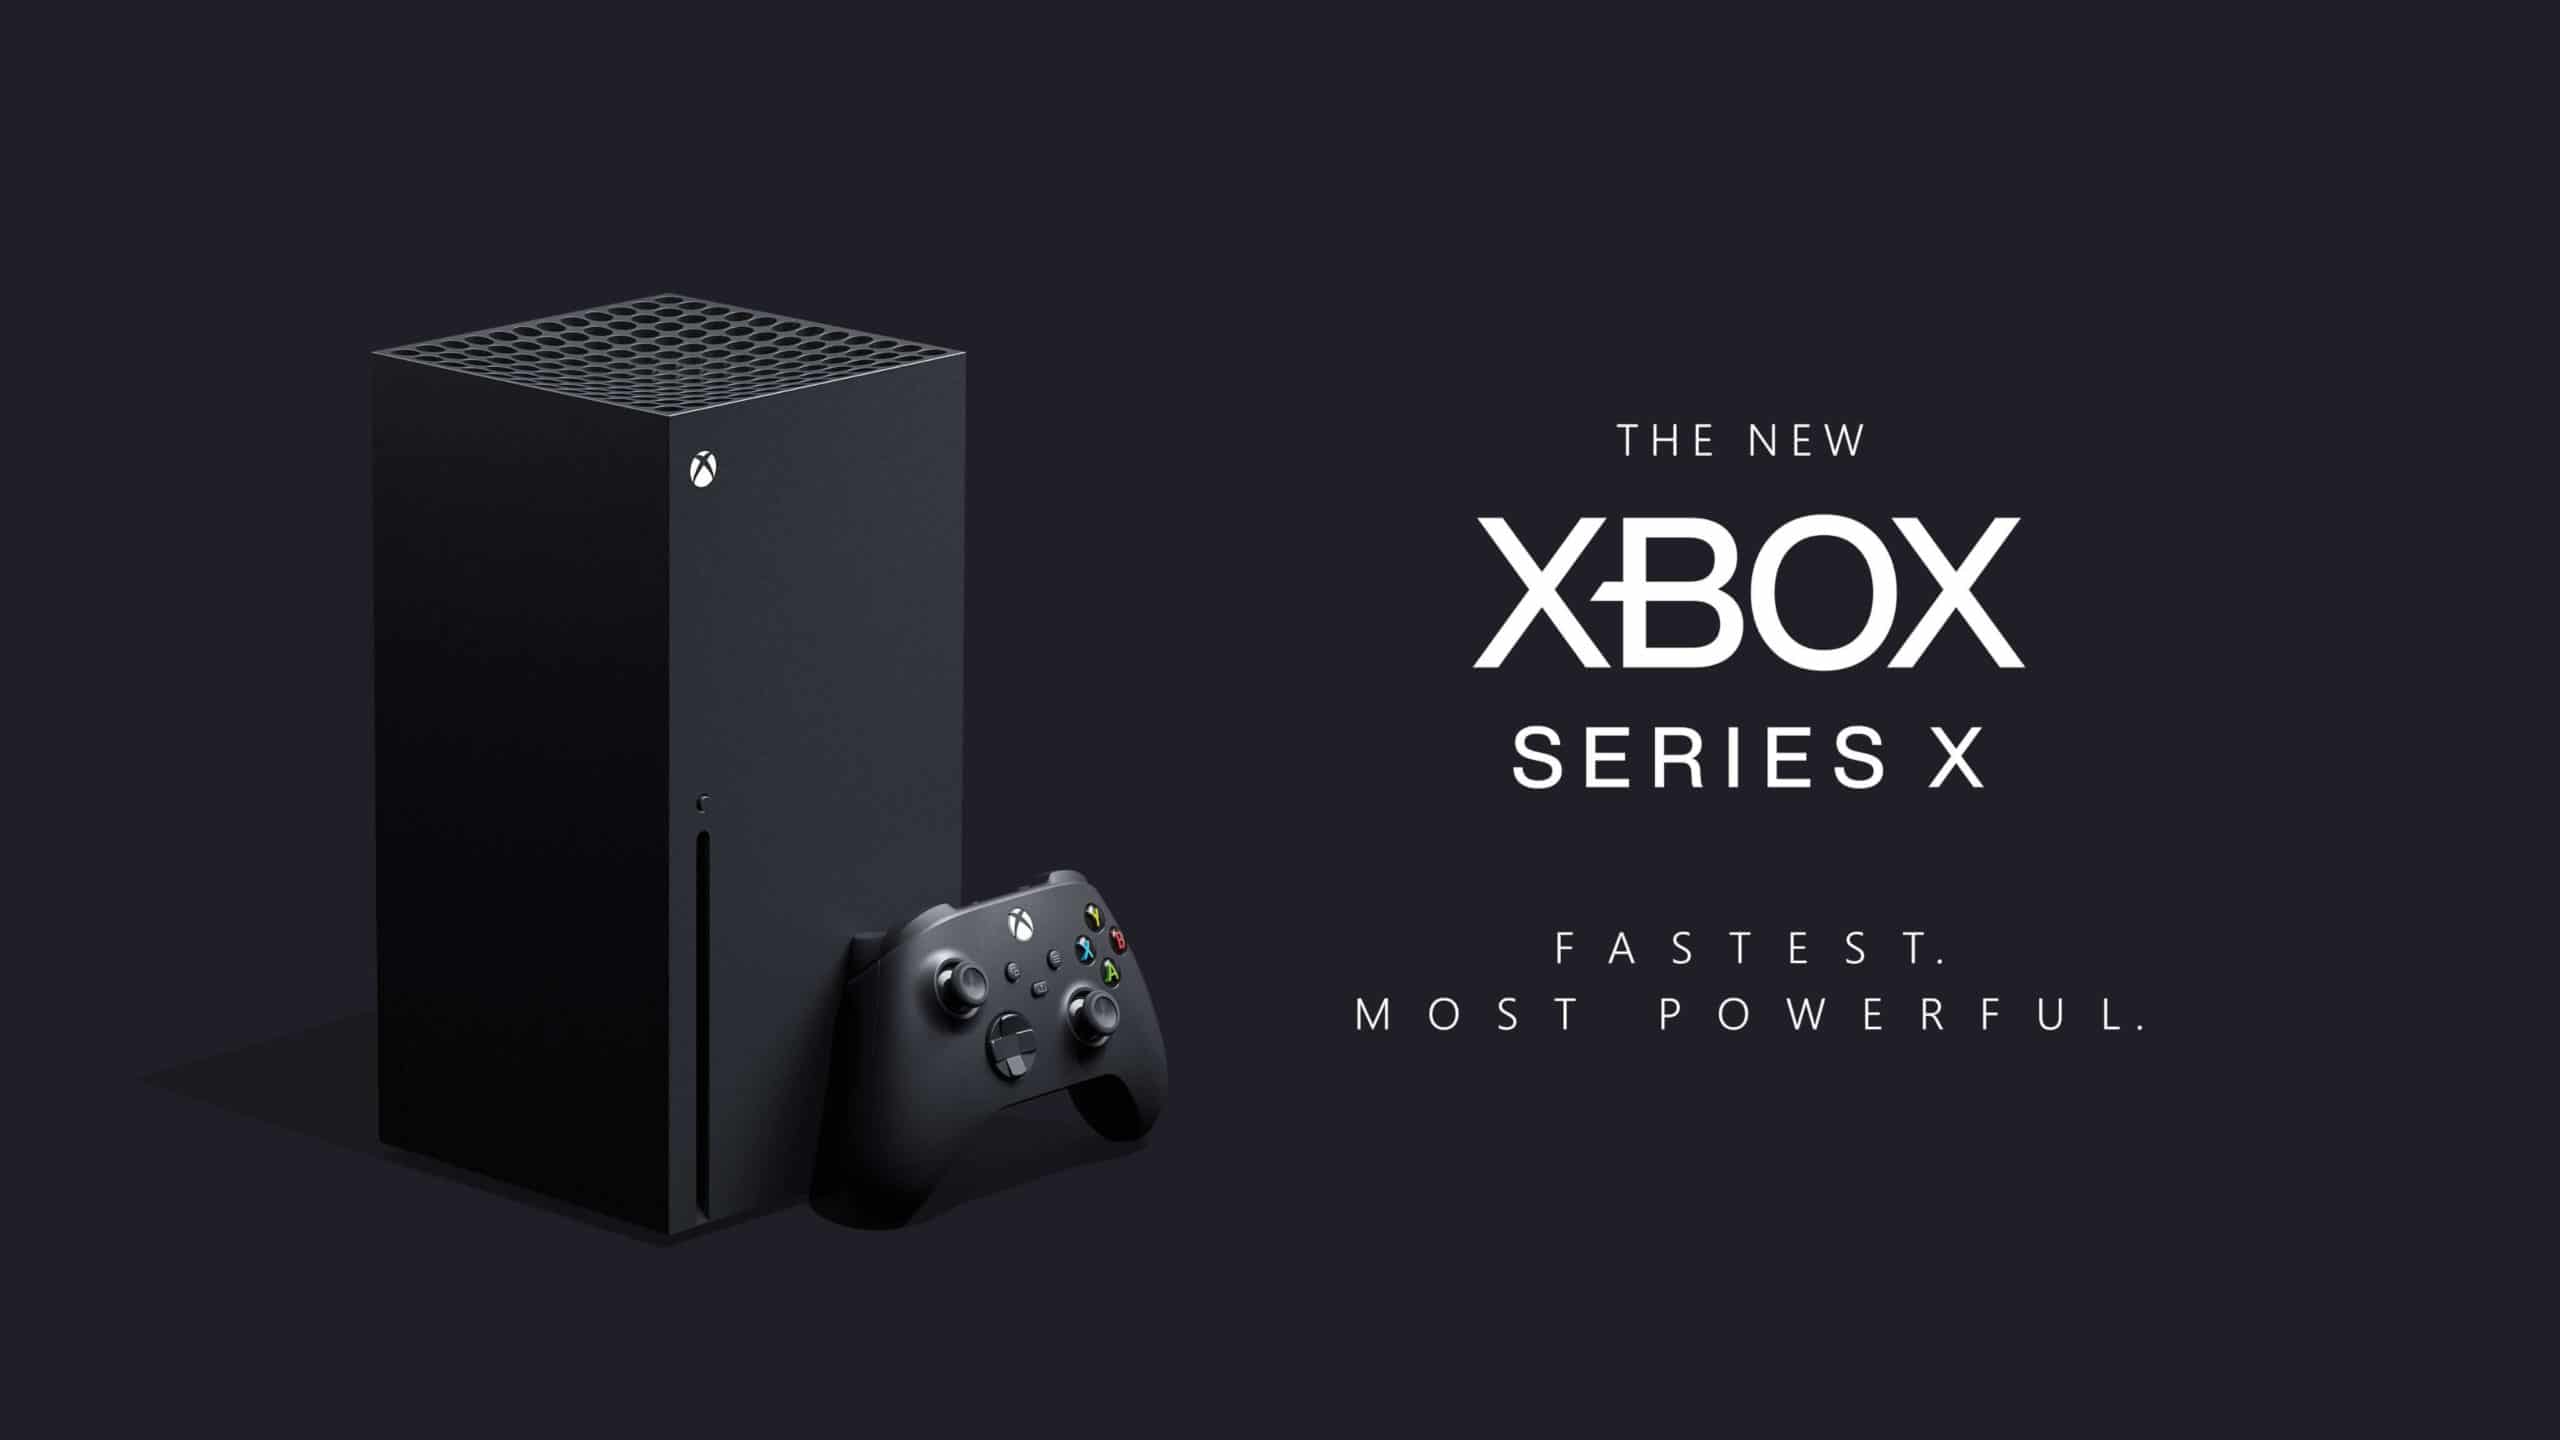 Empaque de la consola Xbox Series X ha sido revelado